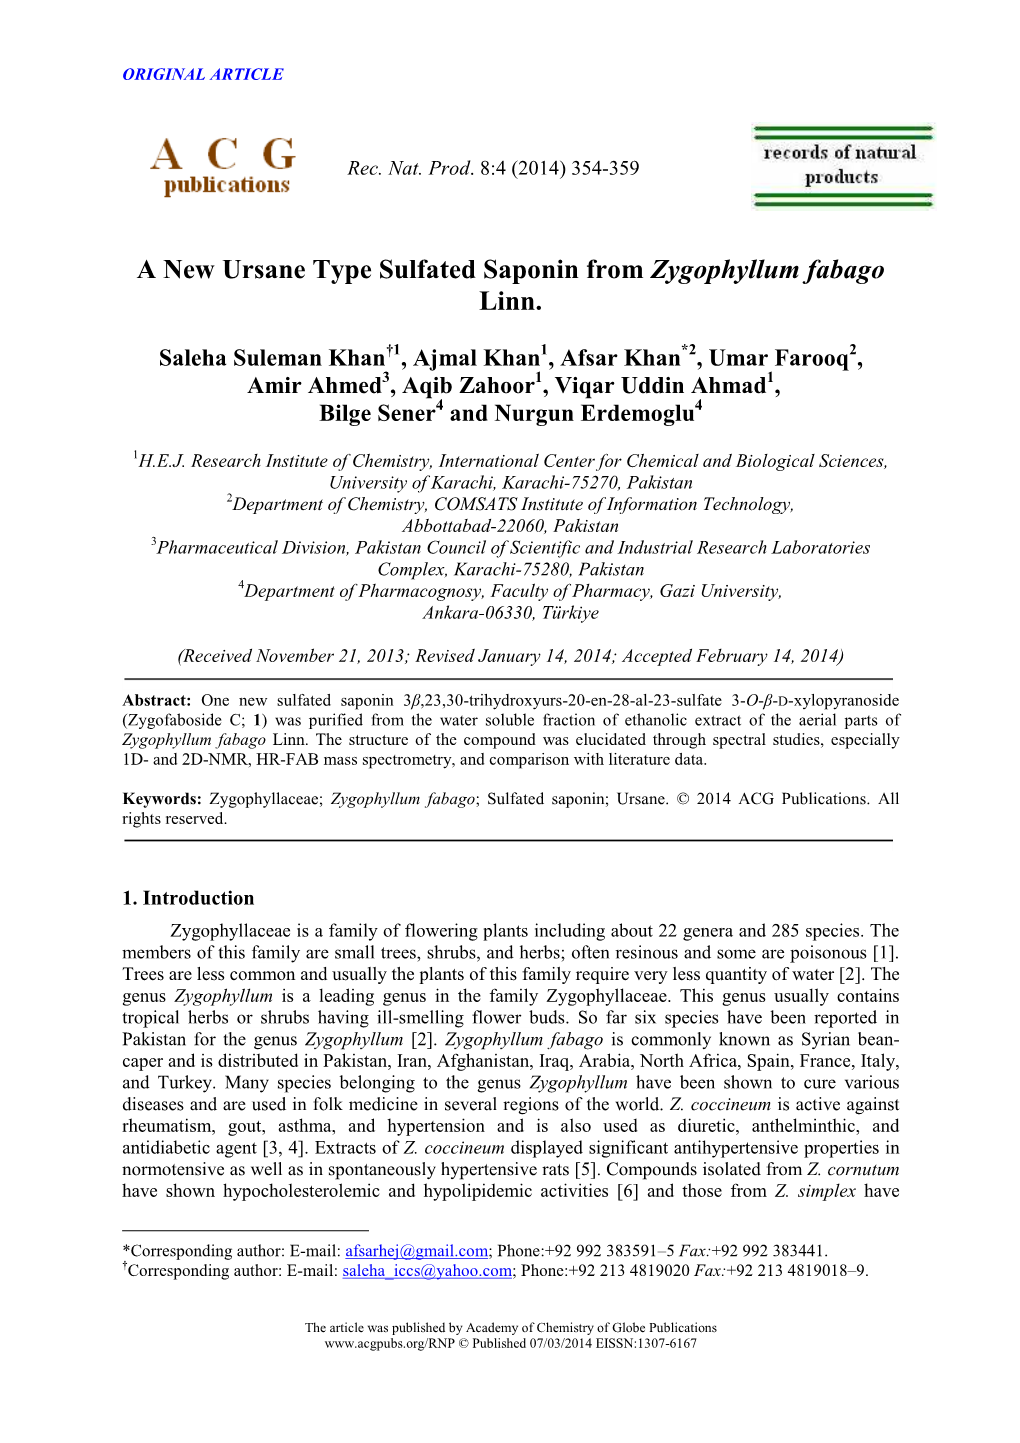 A New Ursane Type Sulfated Saponin from Zygophyllum Fabago Linn